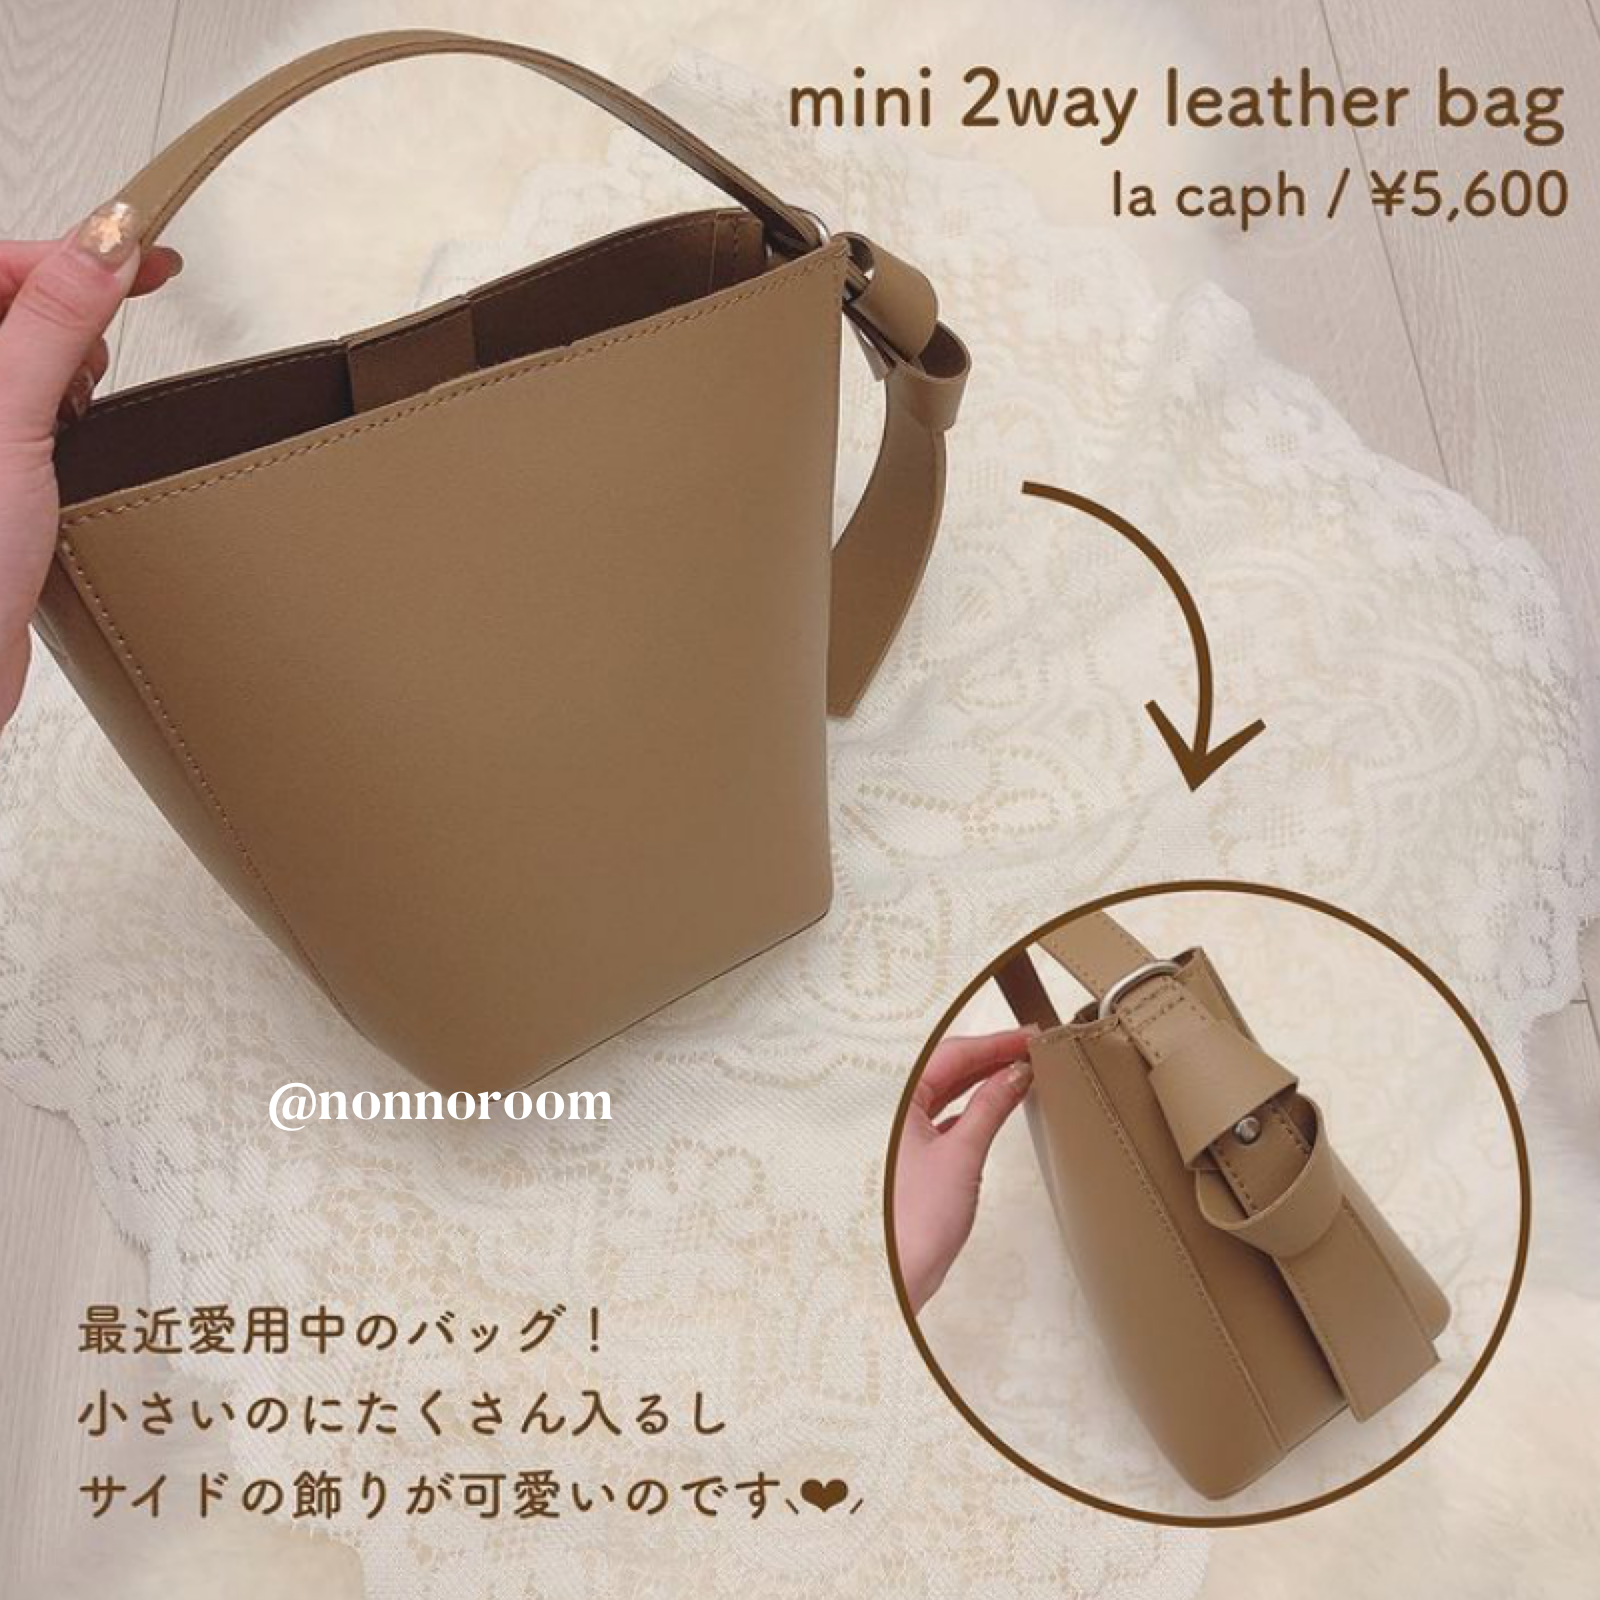 mini 2way leather bag